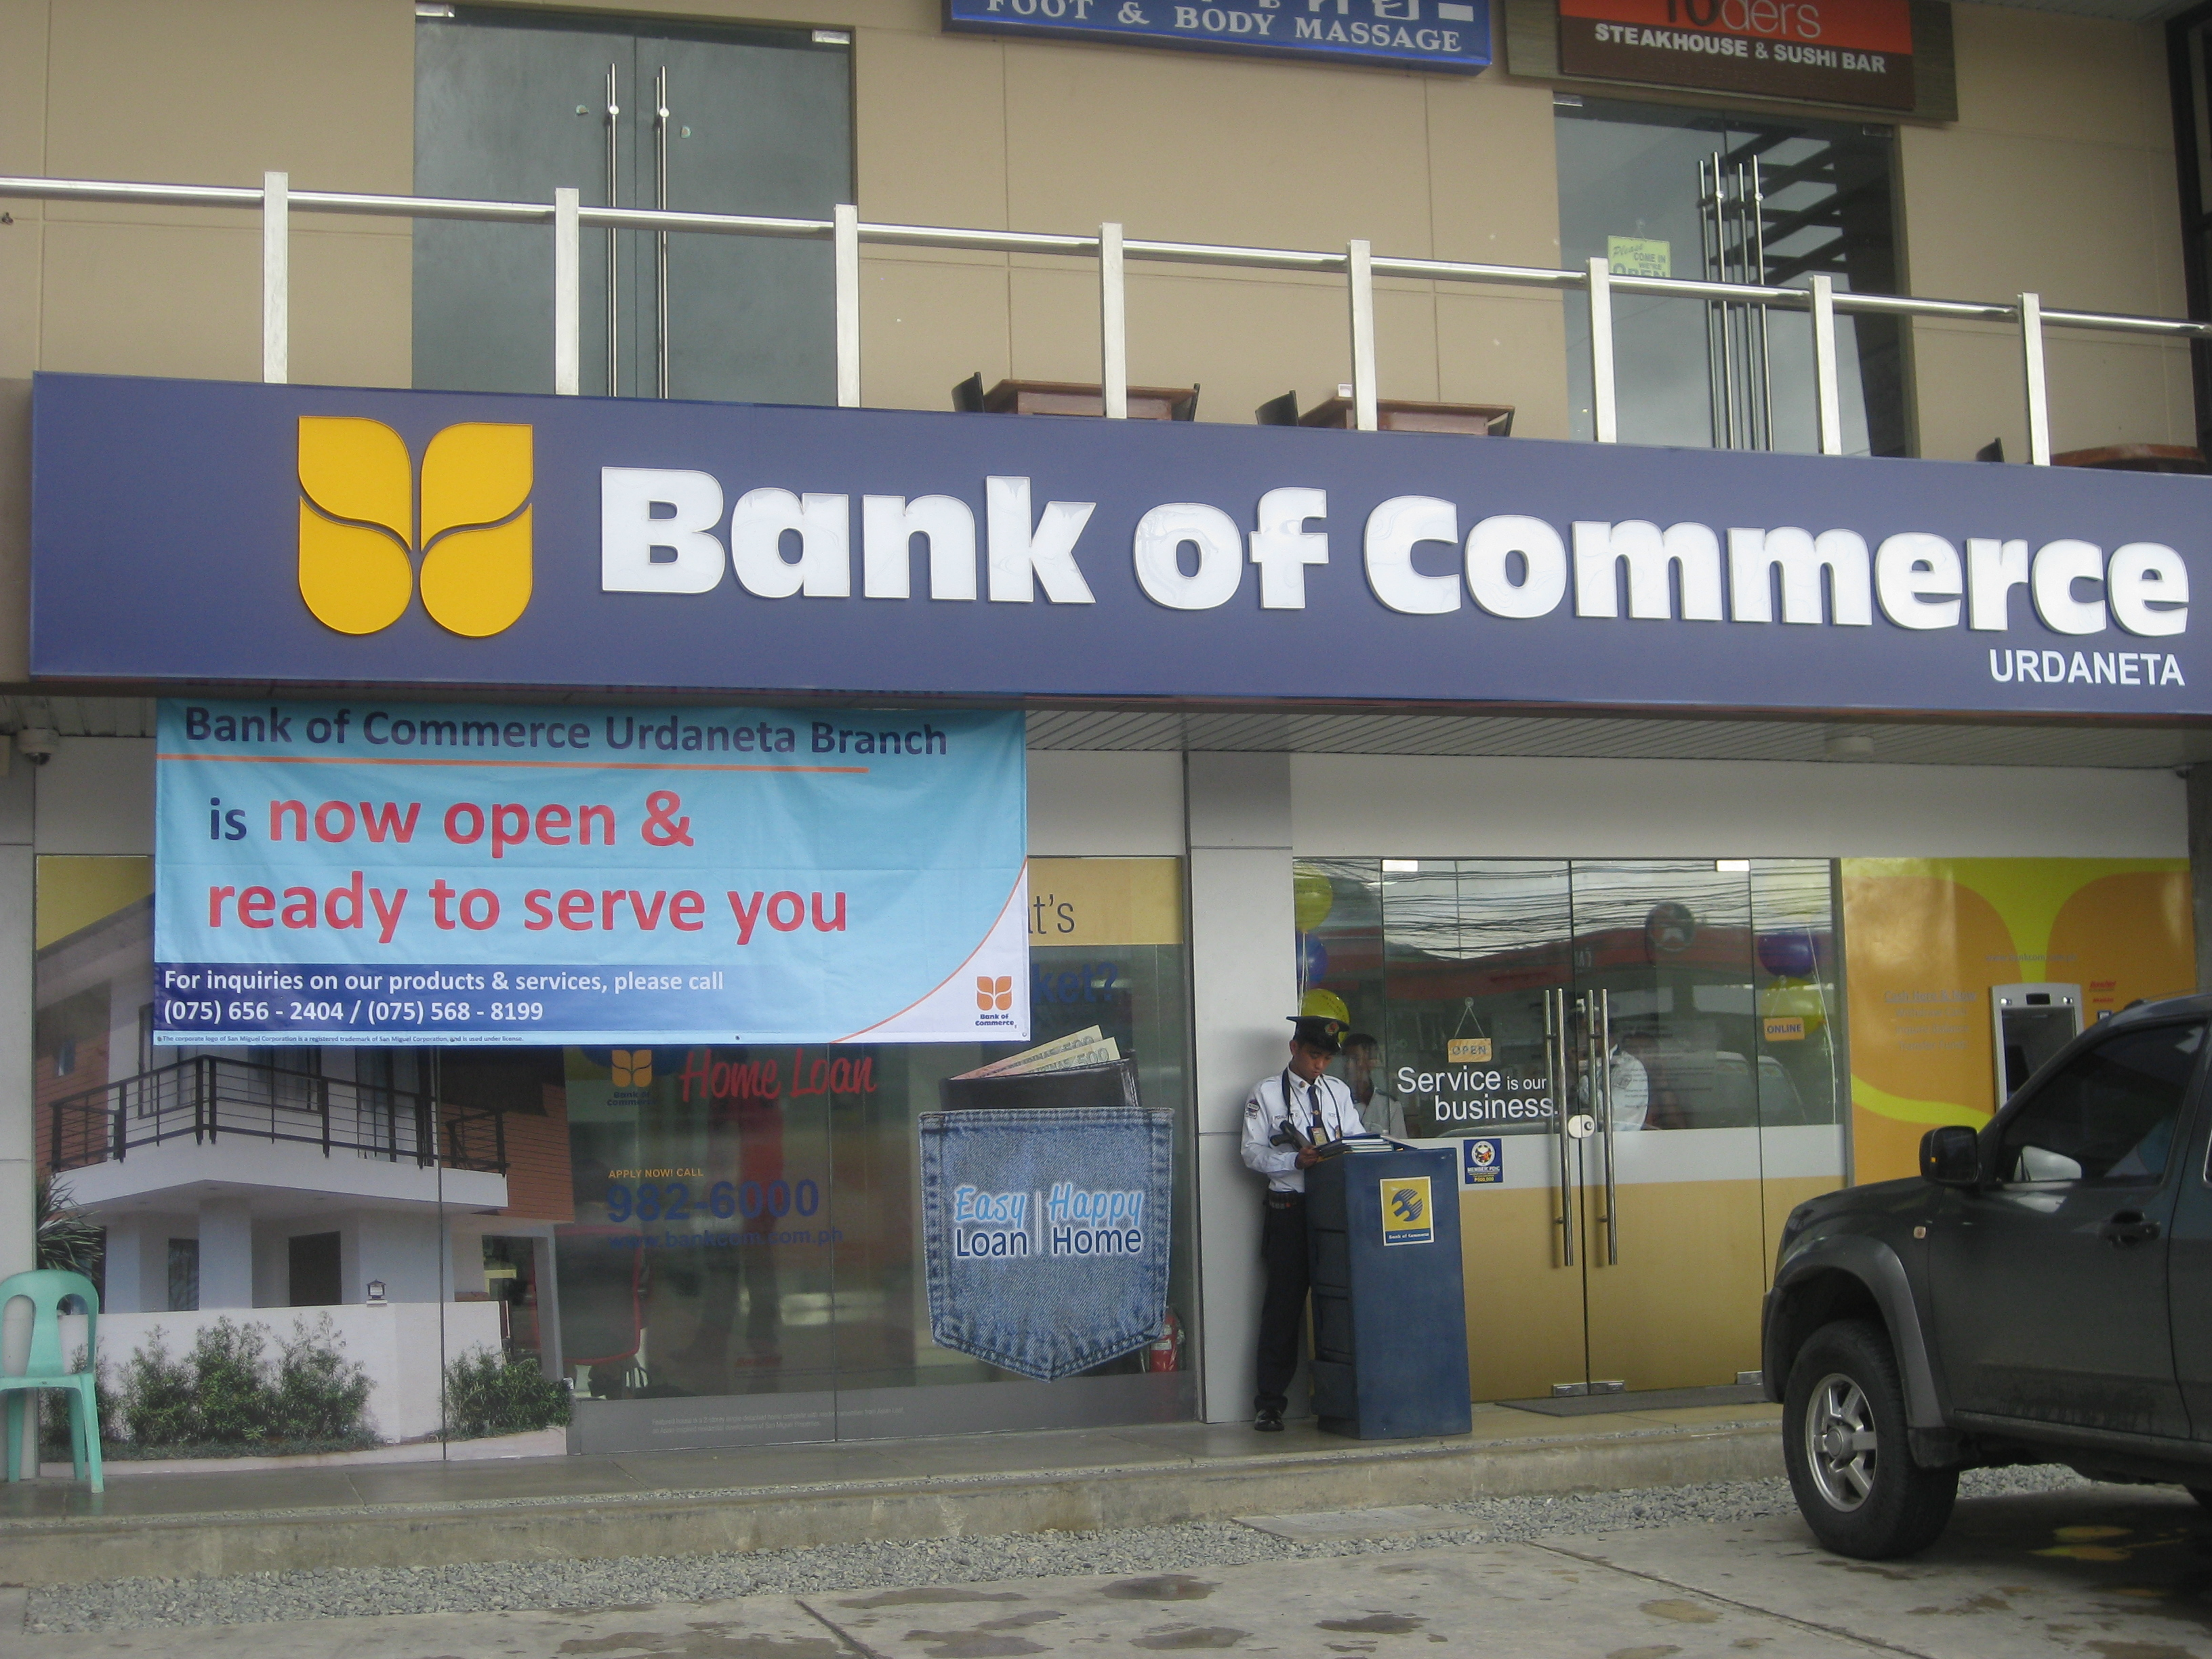 Bank of Commerce Urdaneta Branch Reopens